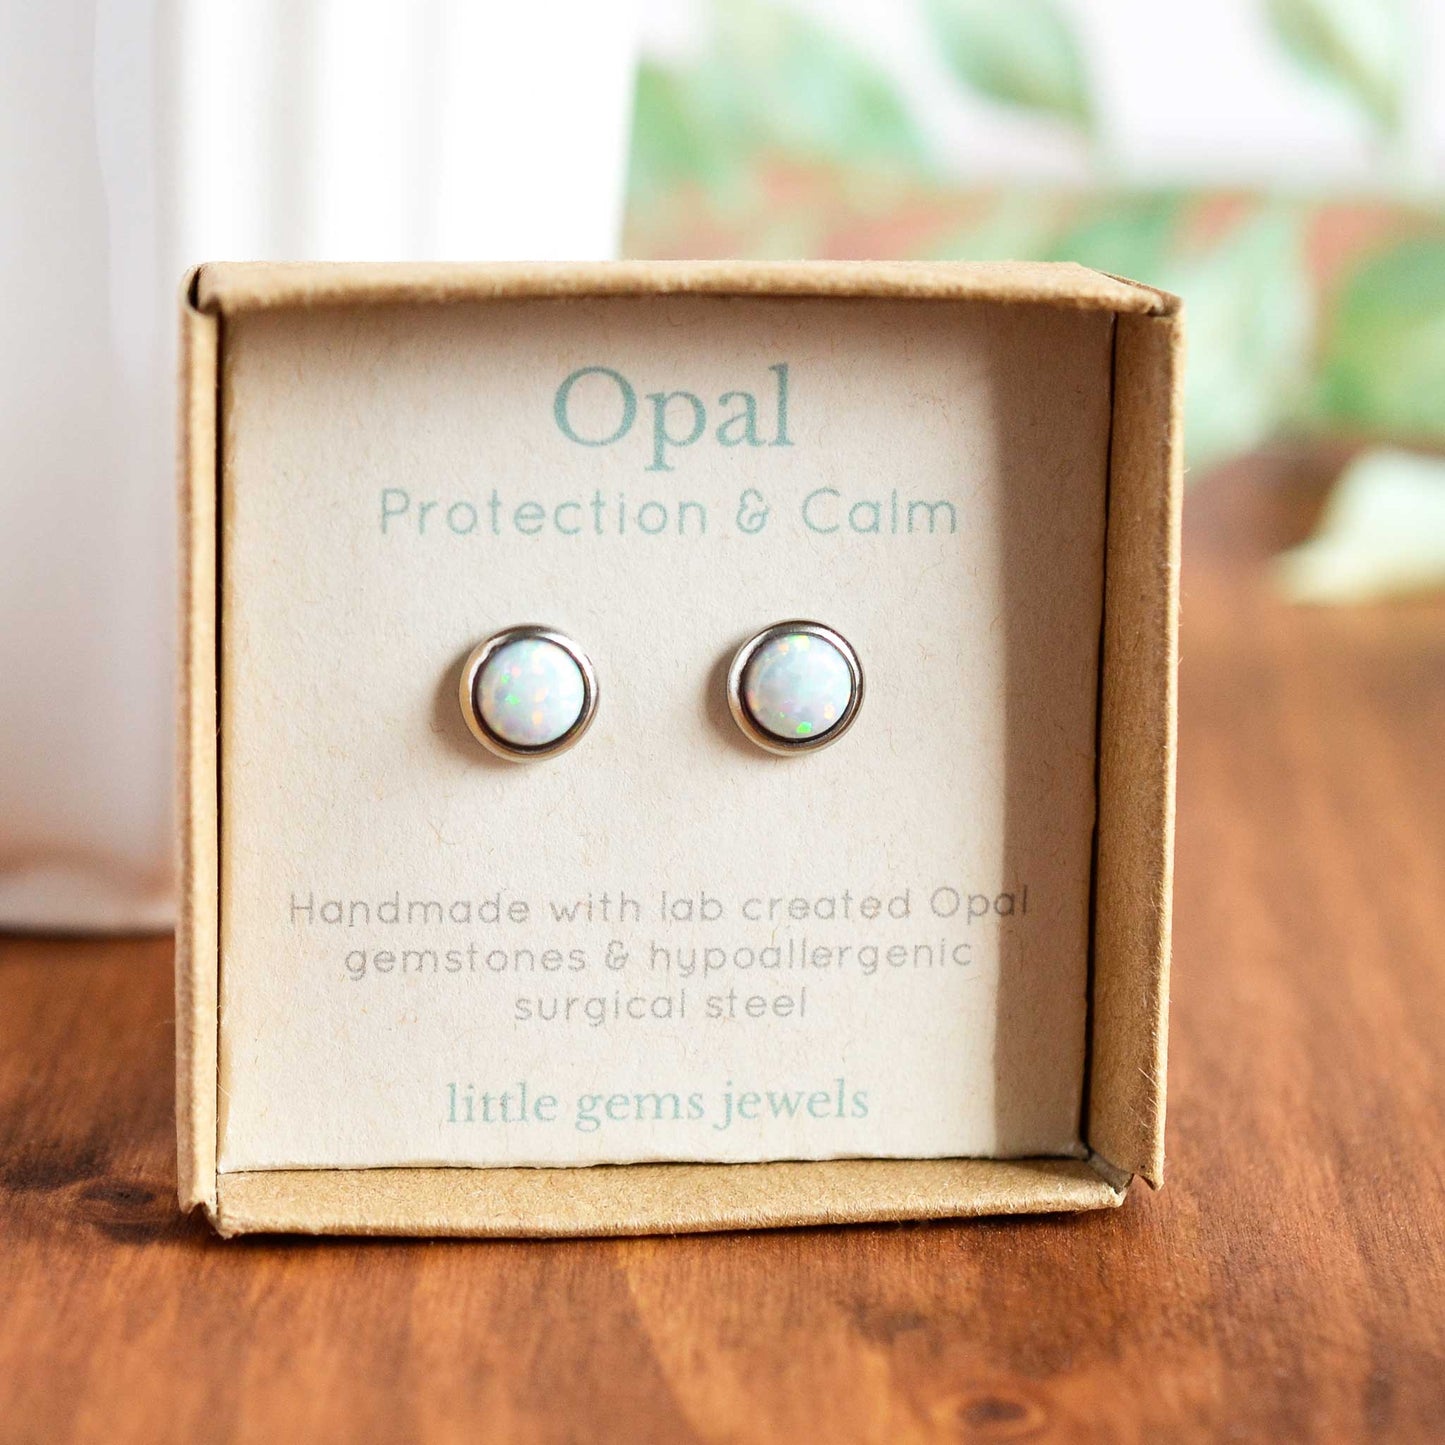 White lab created Opal gemstone stud earrings in gift box